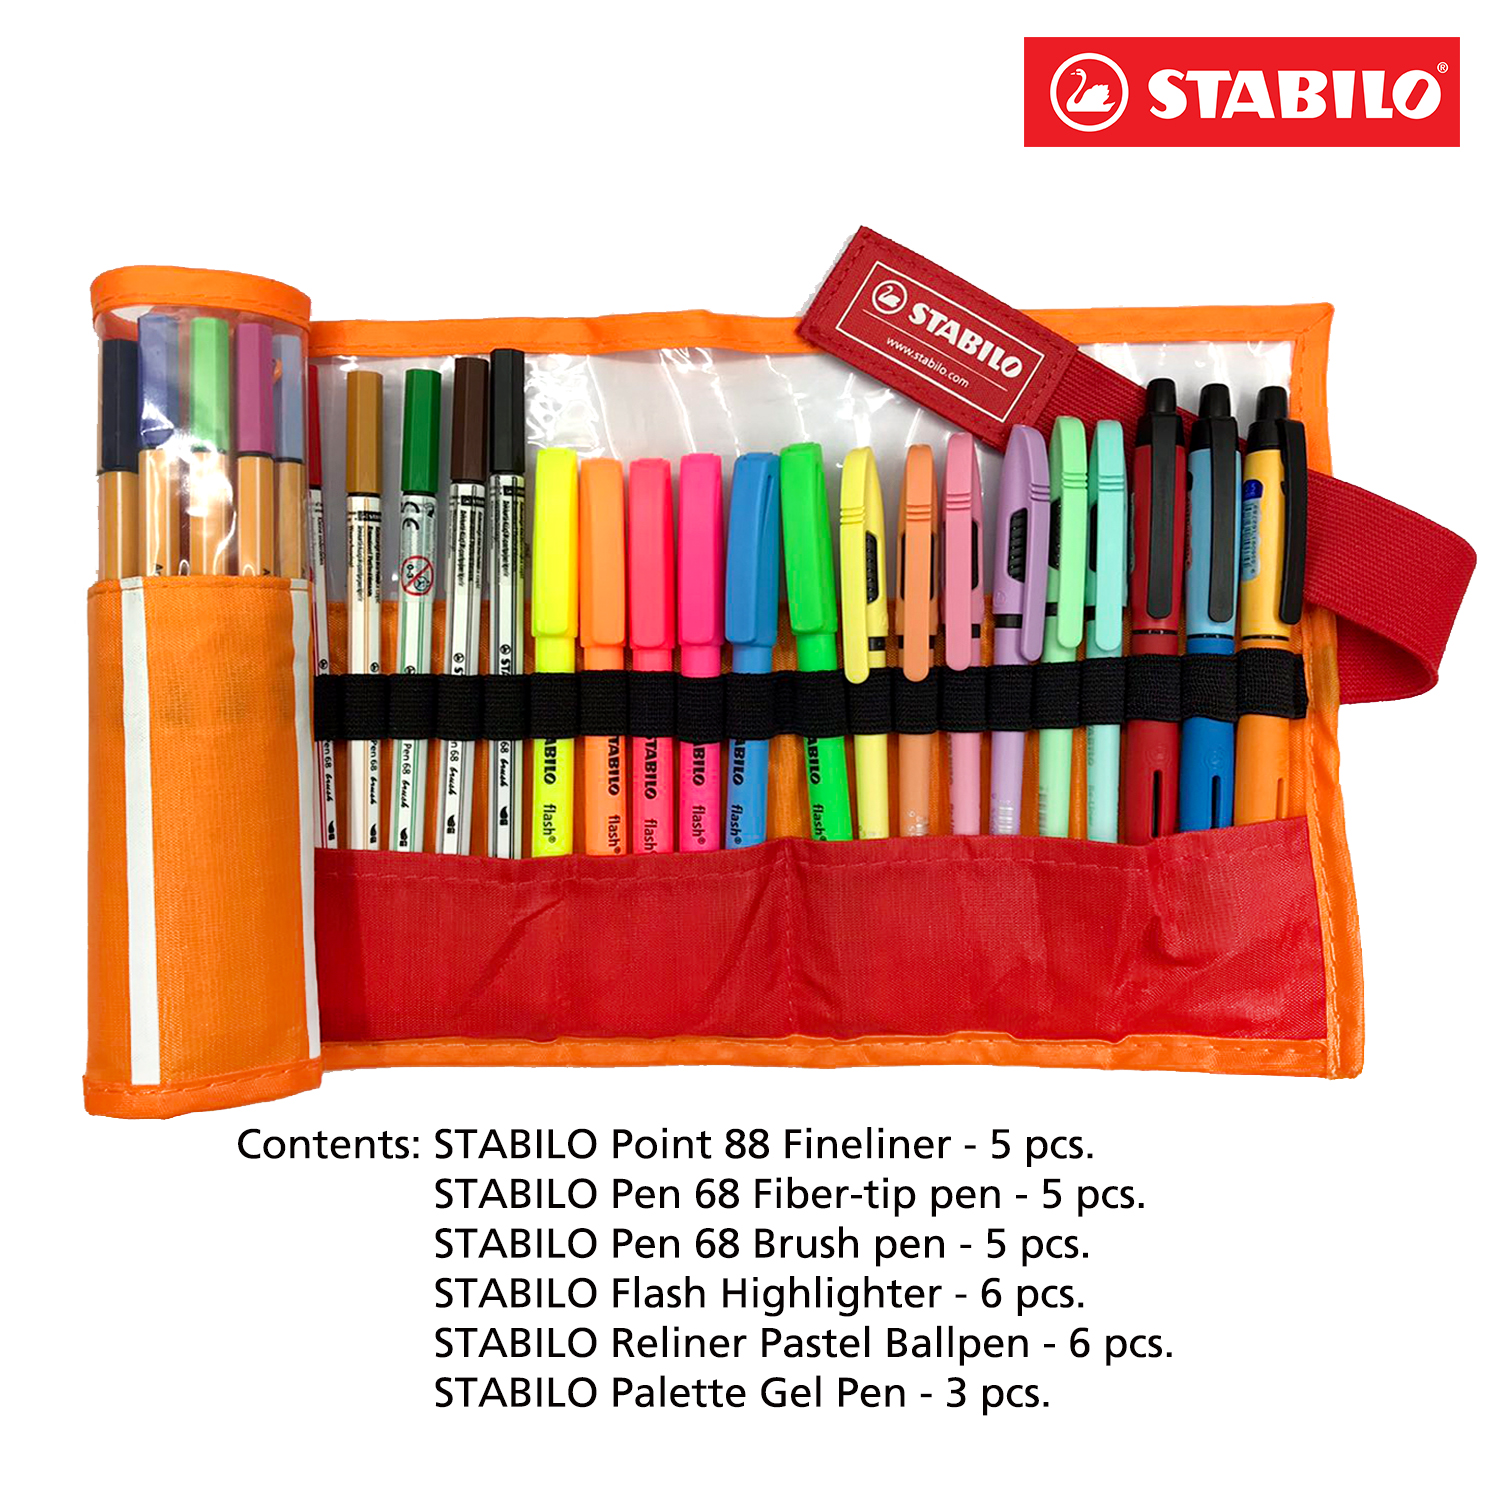 Point 88 Fineliner Pen Set - Assorted Colors, Set of 30